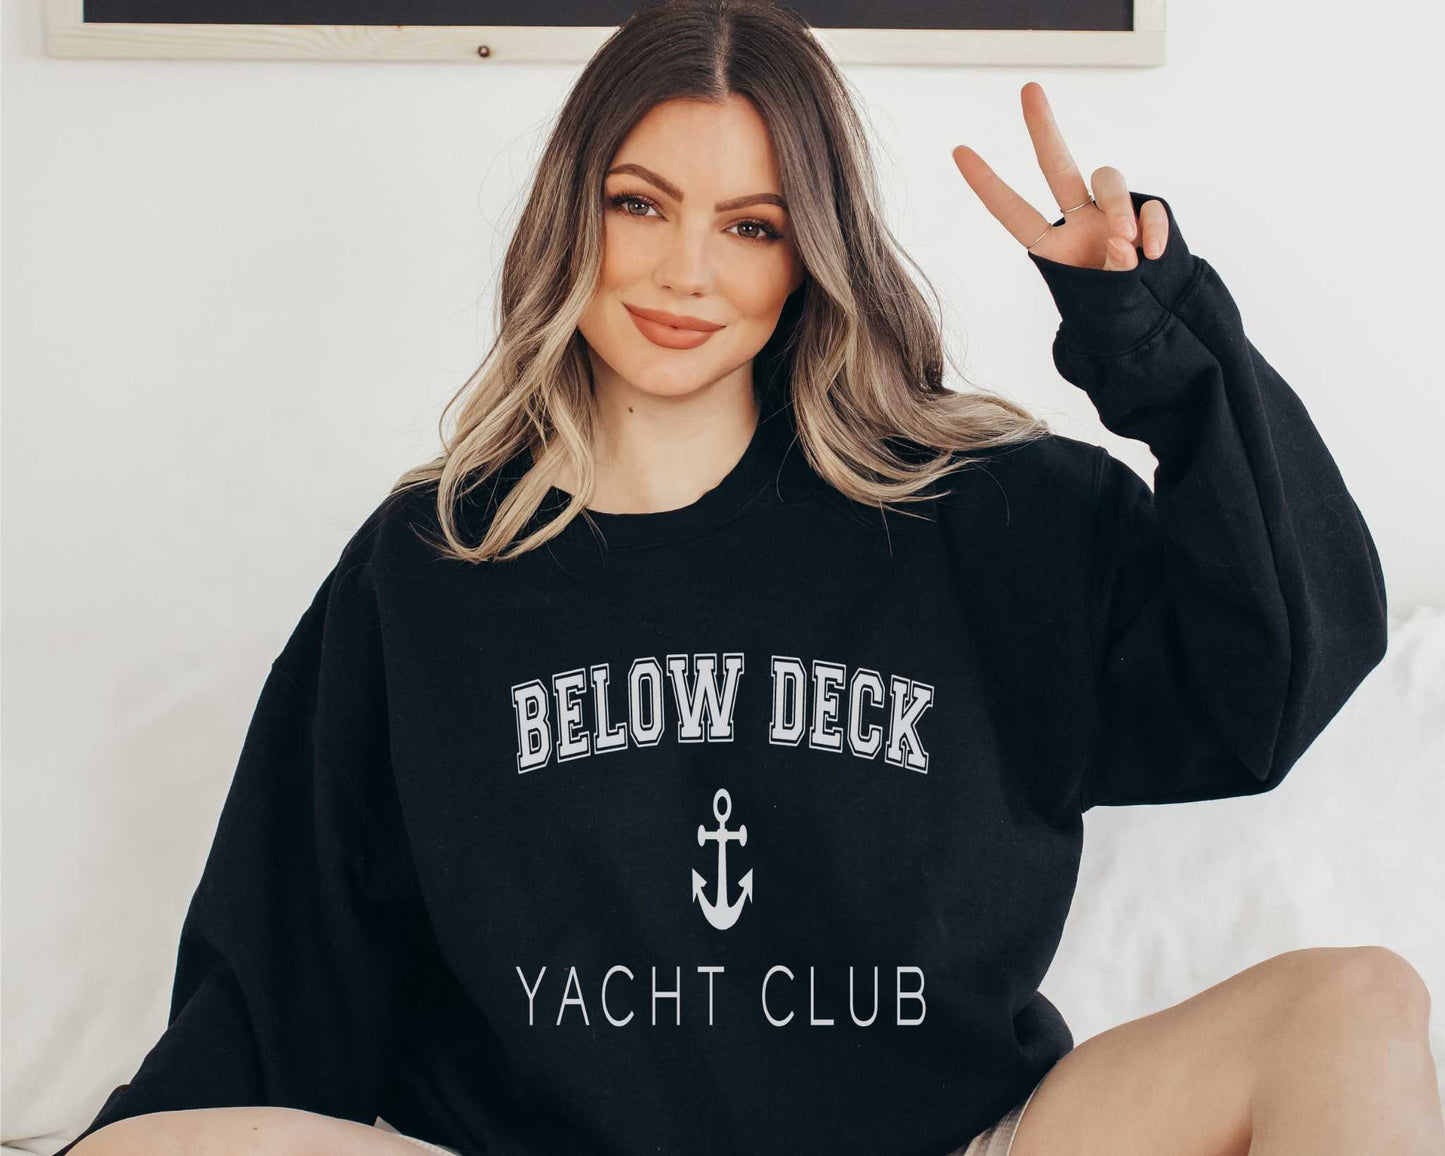 Below Deck Sweatshirt in Black